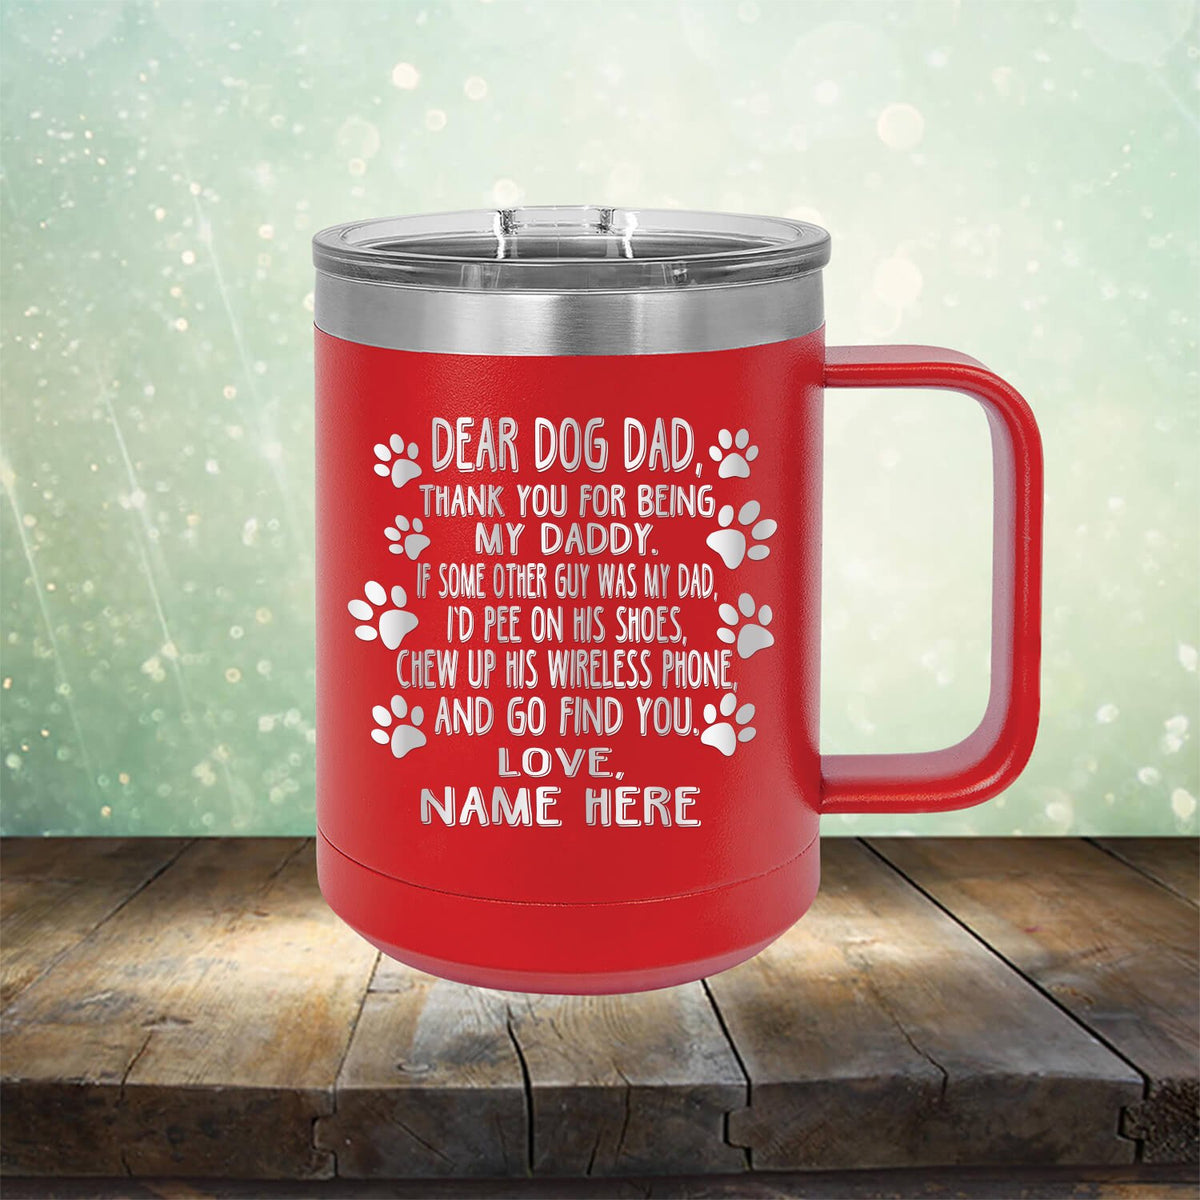 Dear Dog Dad Thank You For Being My Daddy - Laser Etched Tumbler Mug